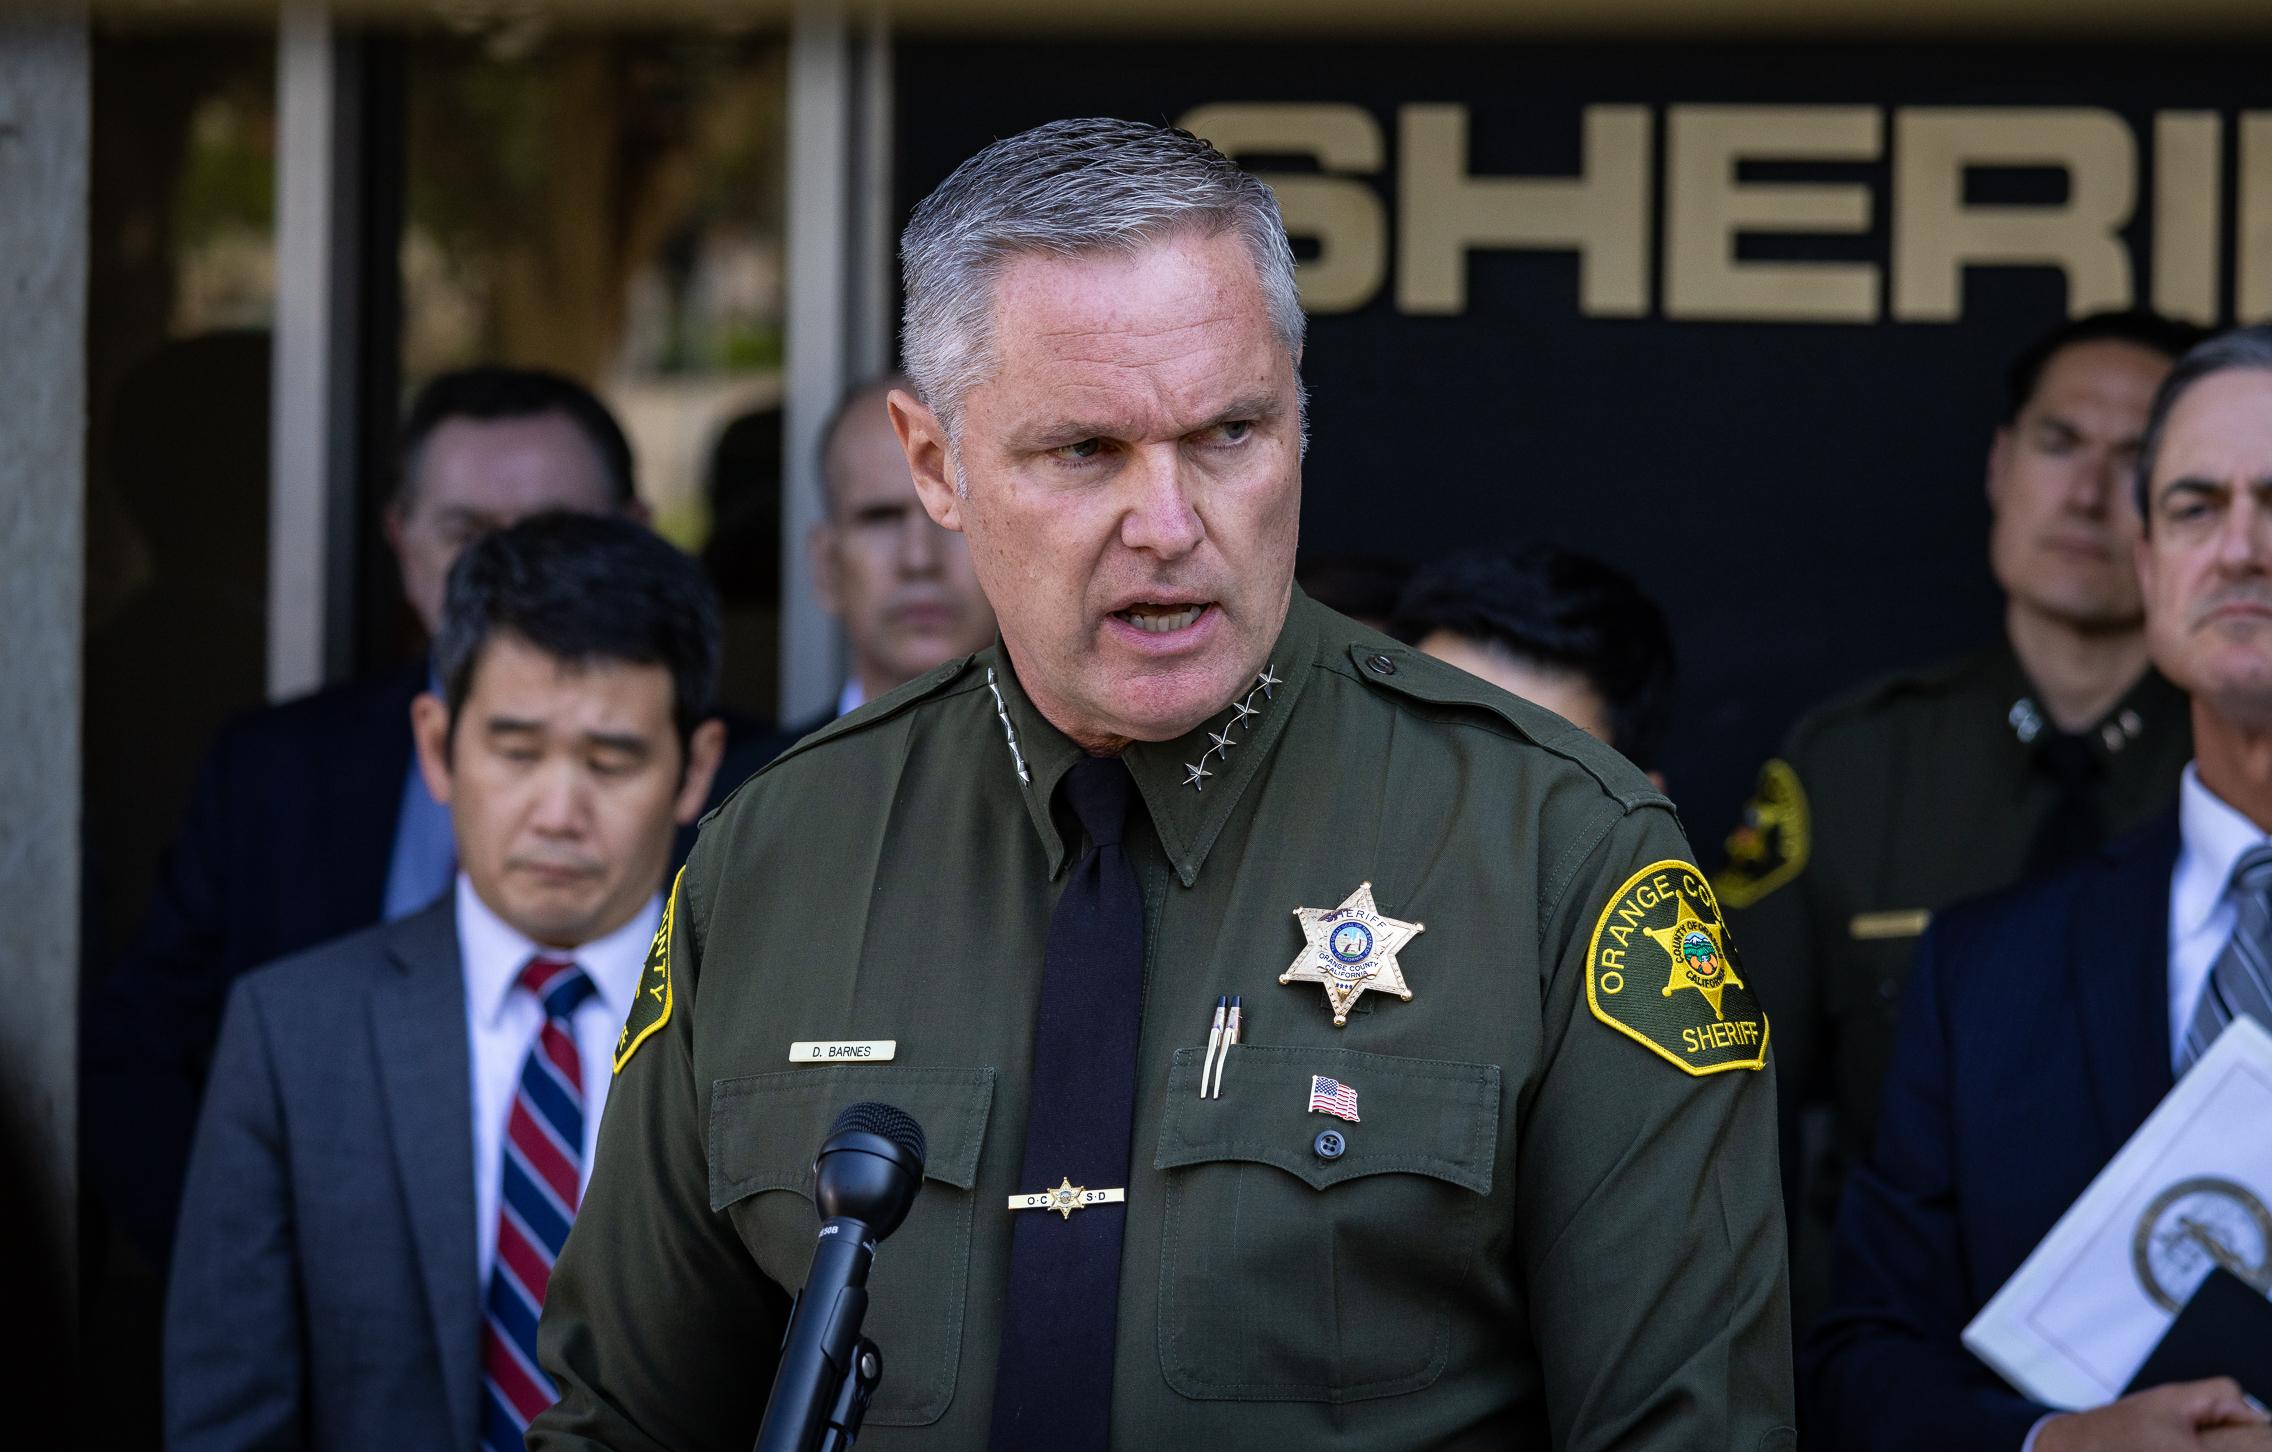 Gunman First Opened Fire on Estranged Wife in California Mass Shooting: Sheriff